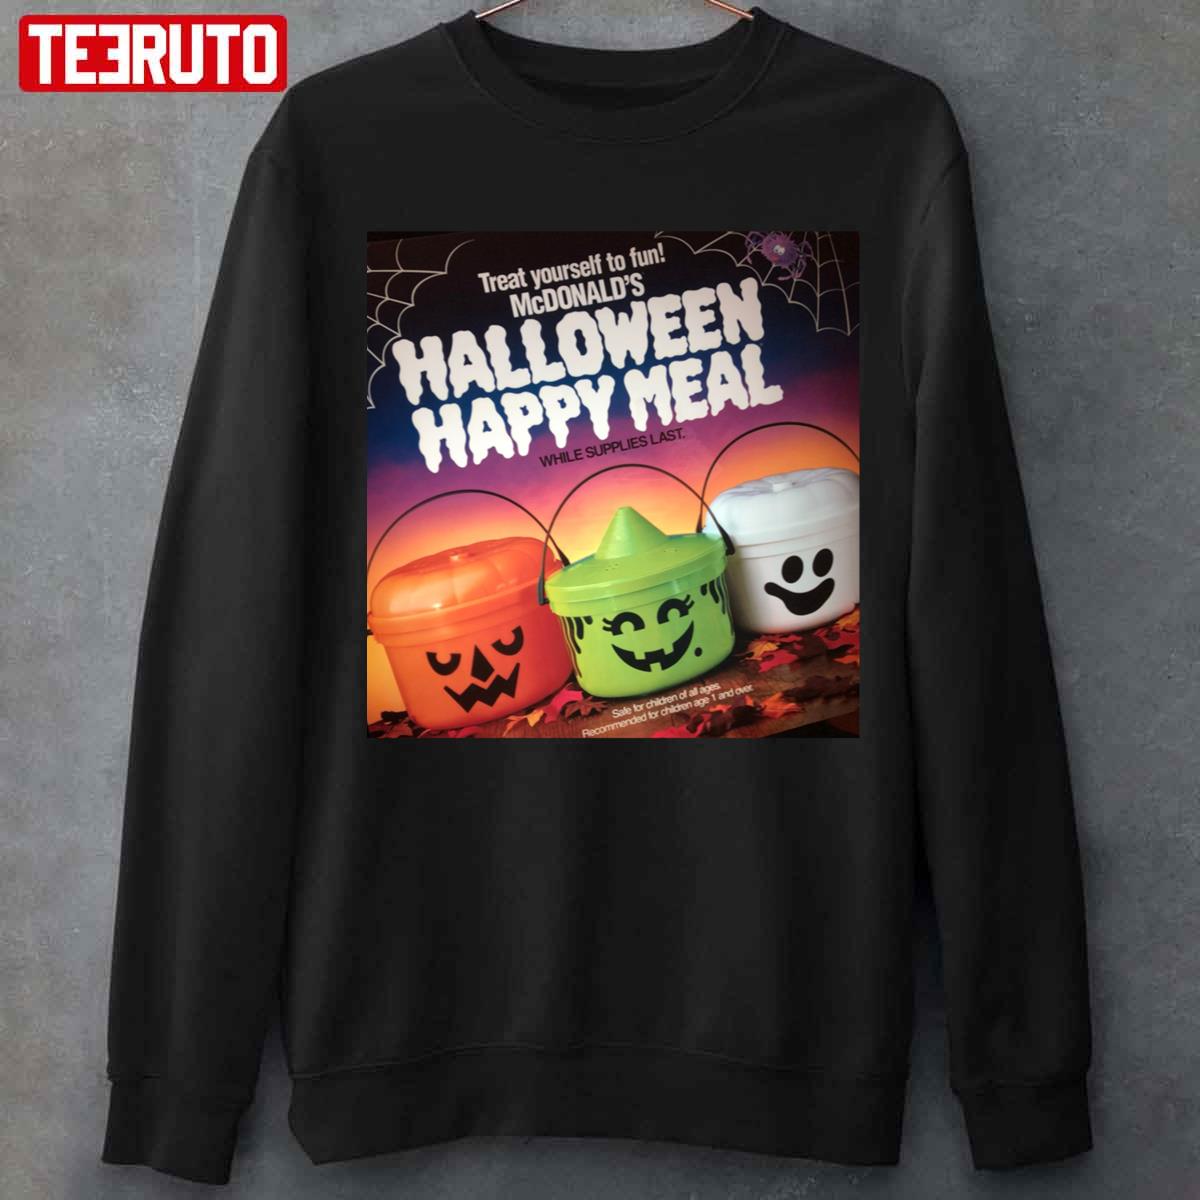 Mcdonald’s Halloween Pail Treat Yourself To Fun Unisex Sweatshirt